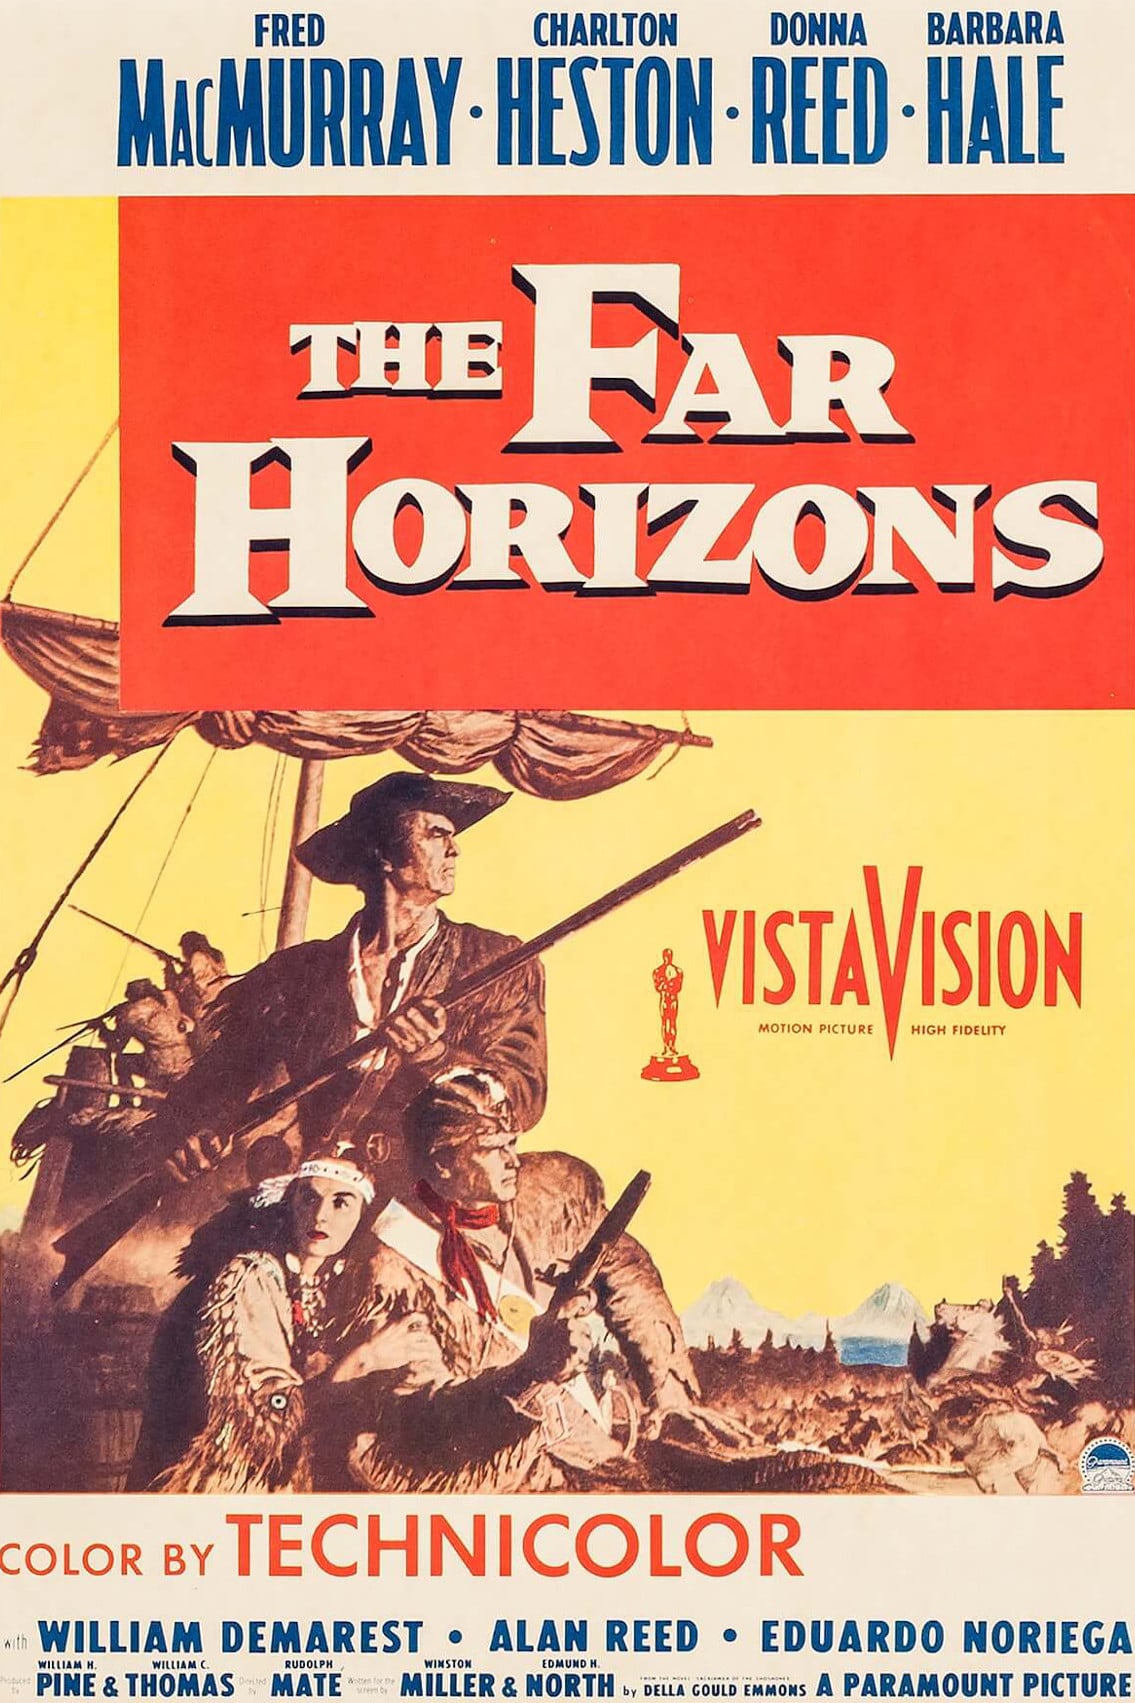 THE FAR HORIZONS